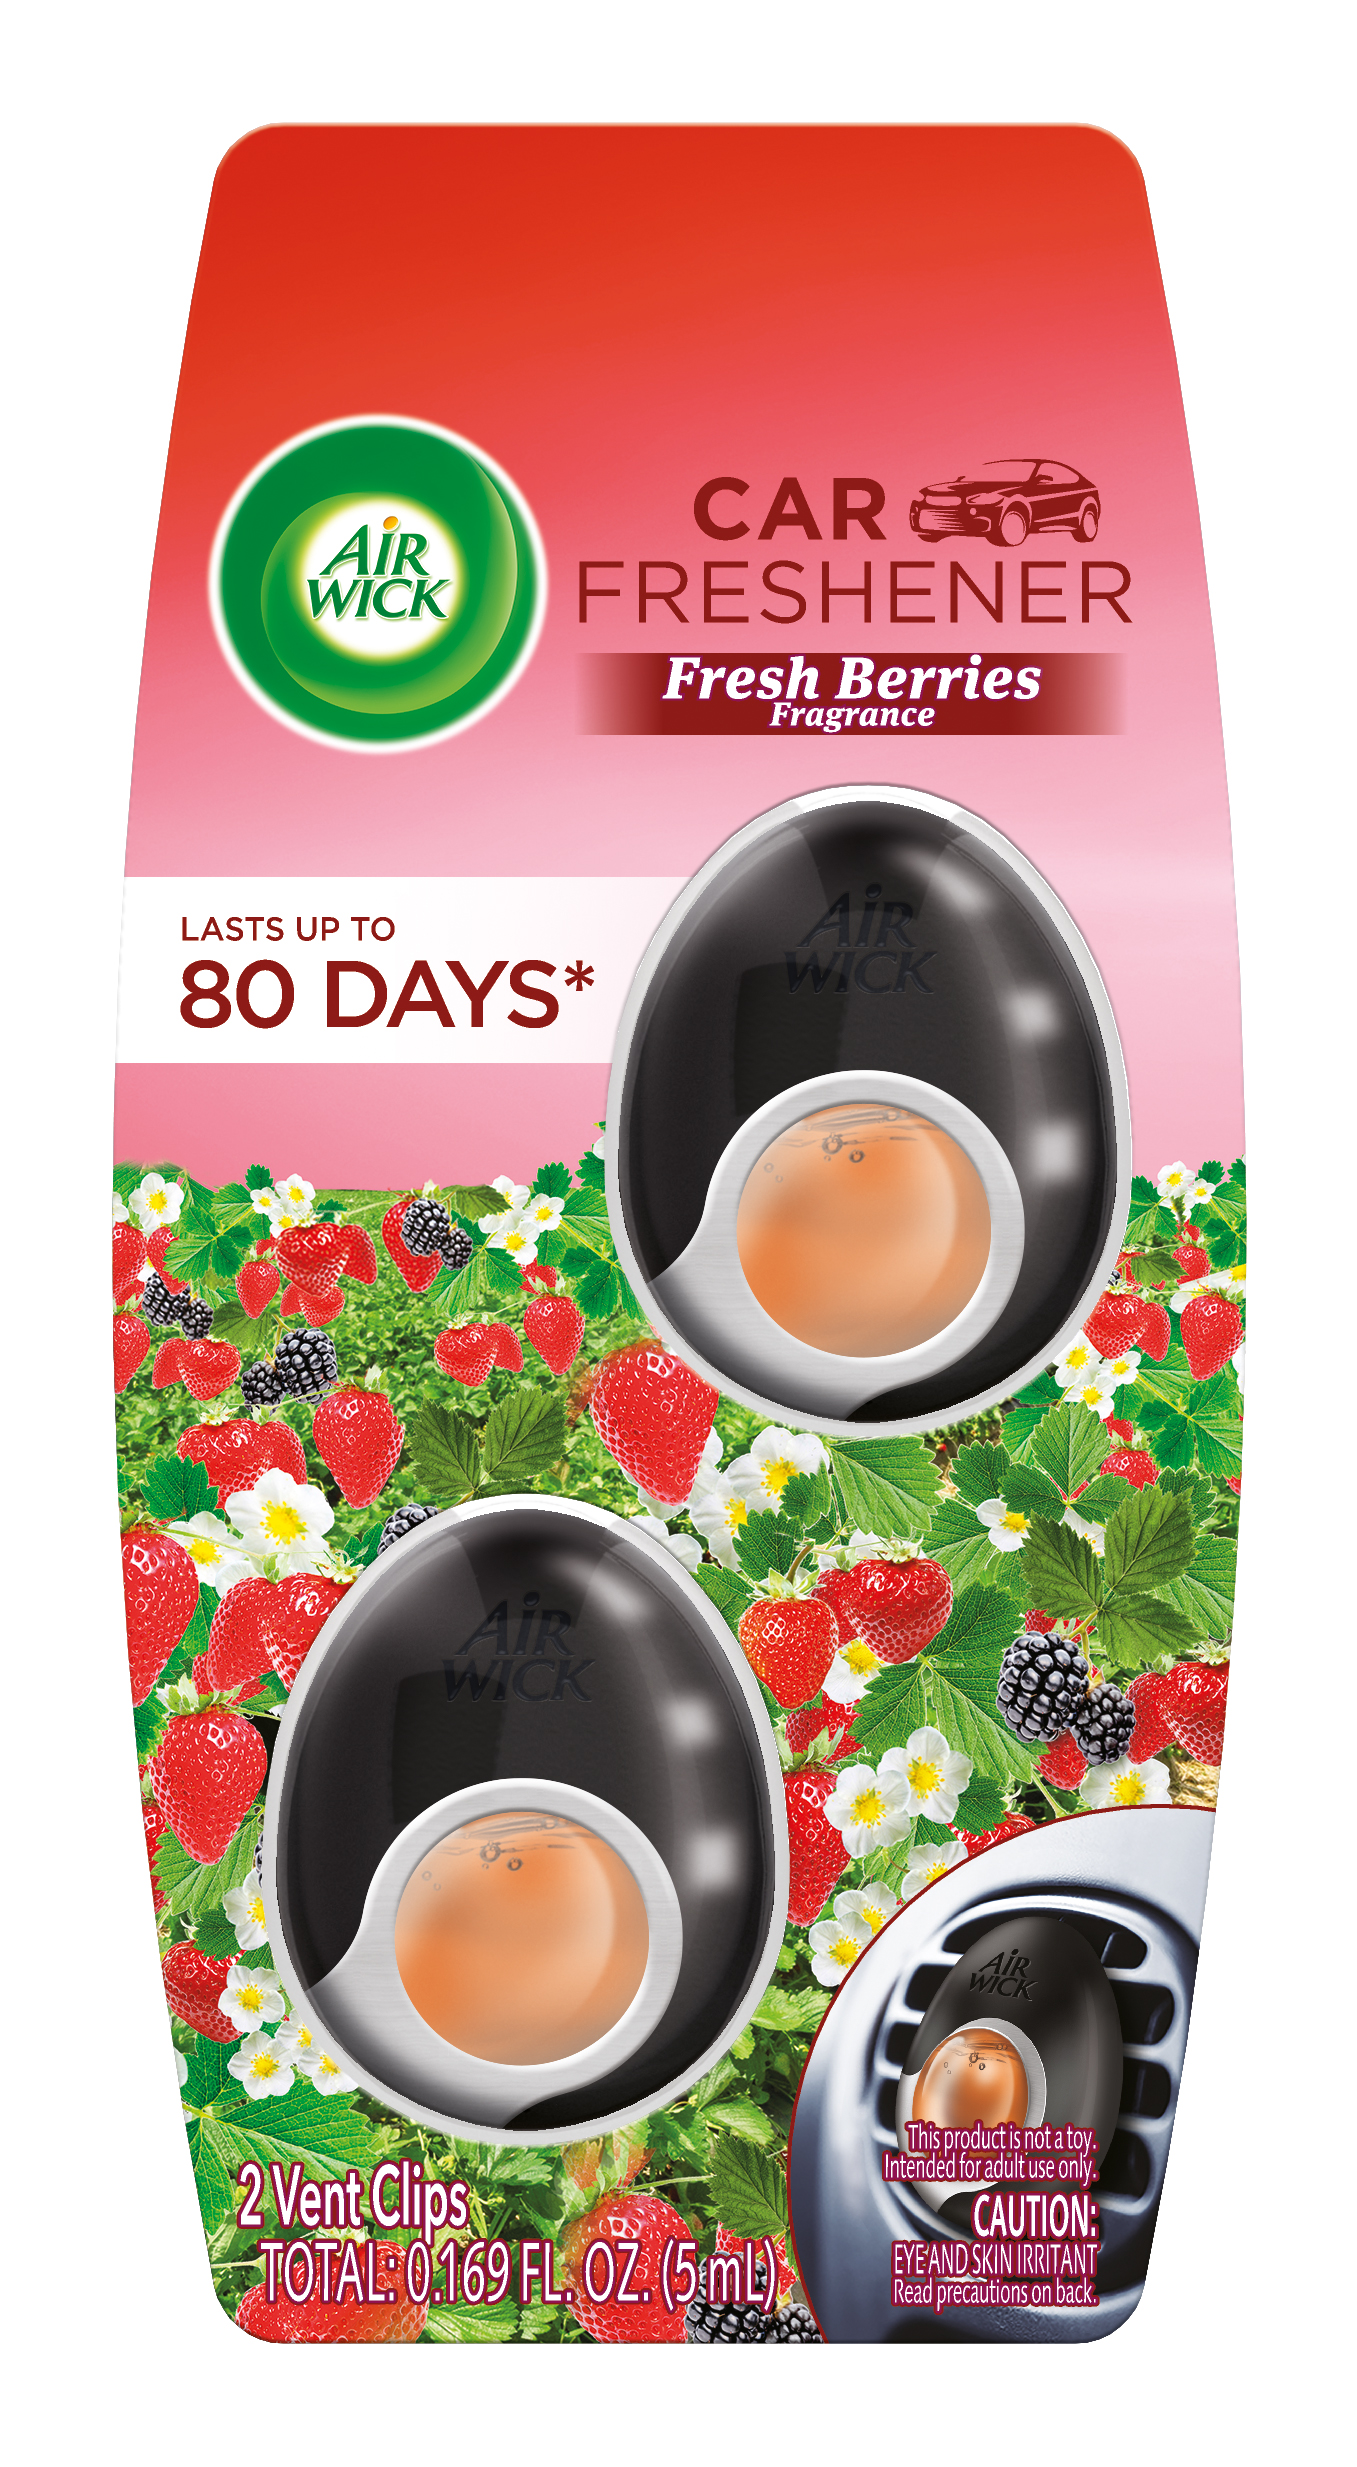 Air Wick Car Freshener Clip - Fresh Berries